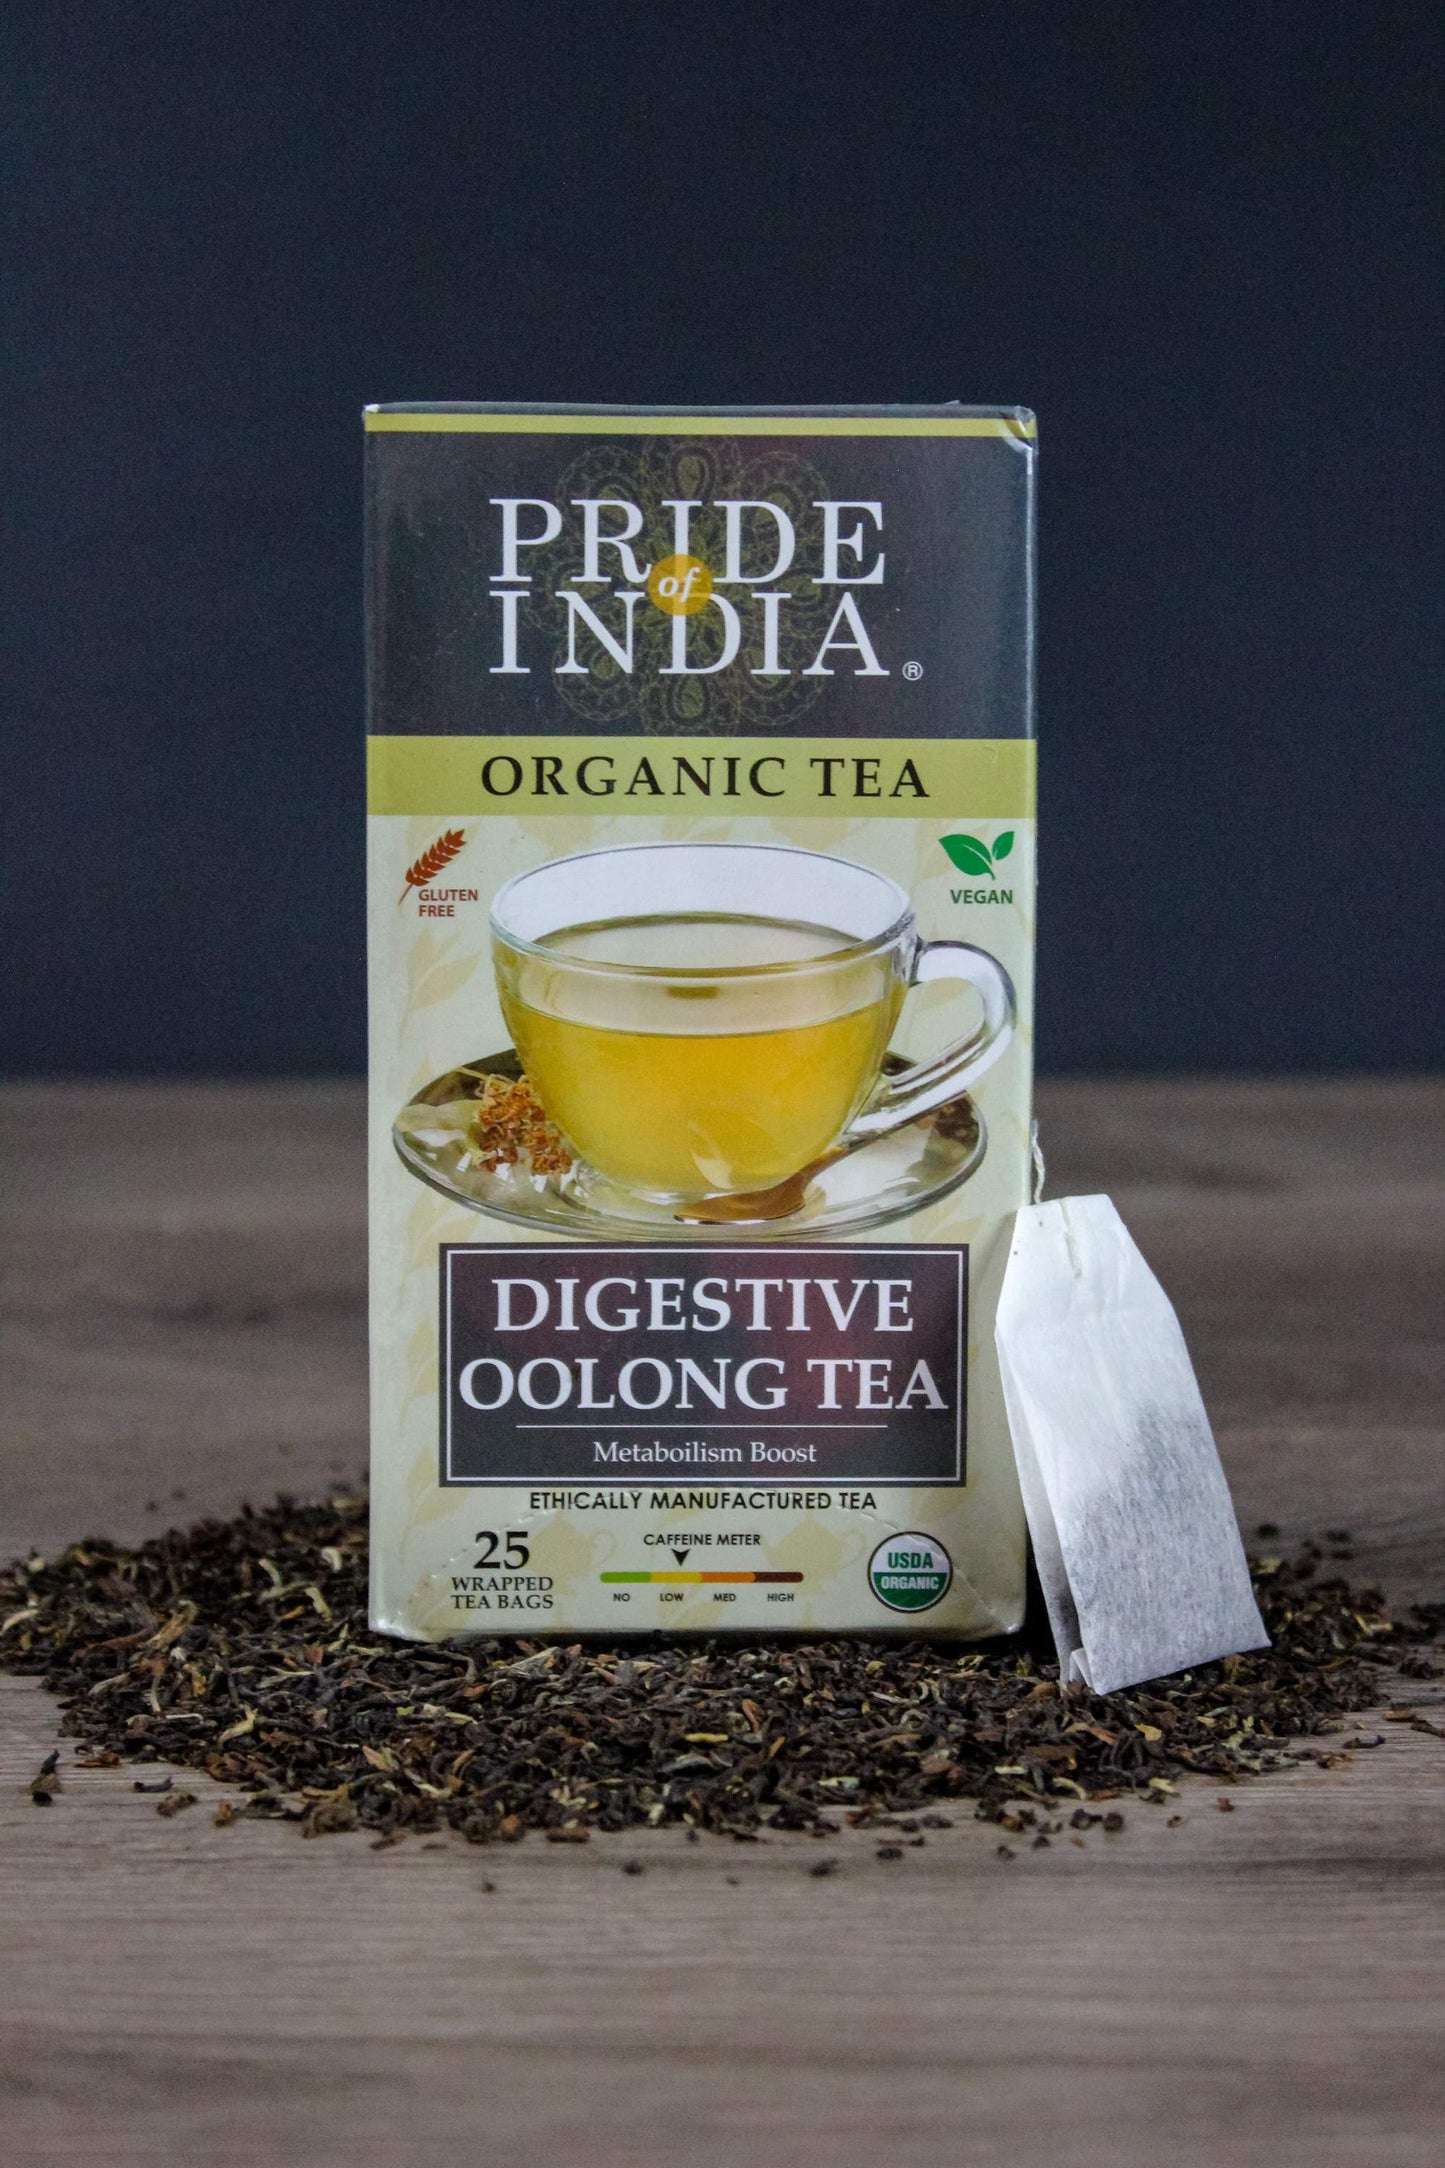 Organic Digestive Oolong Tea Bags